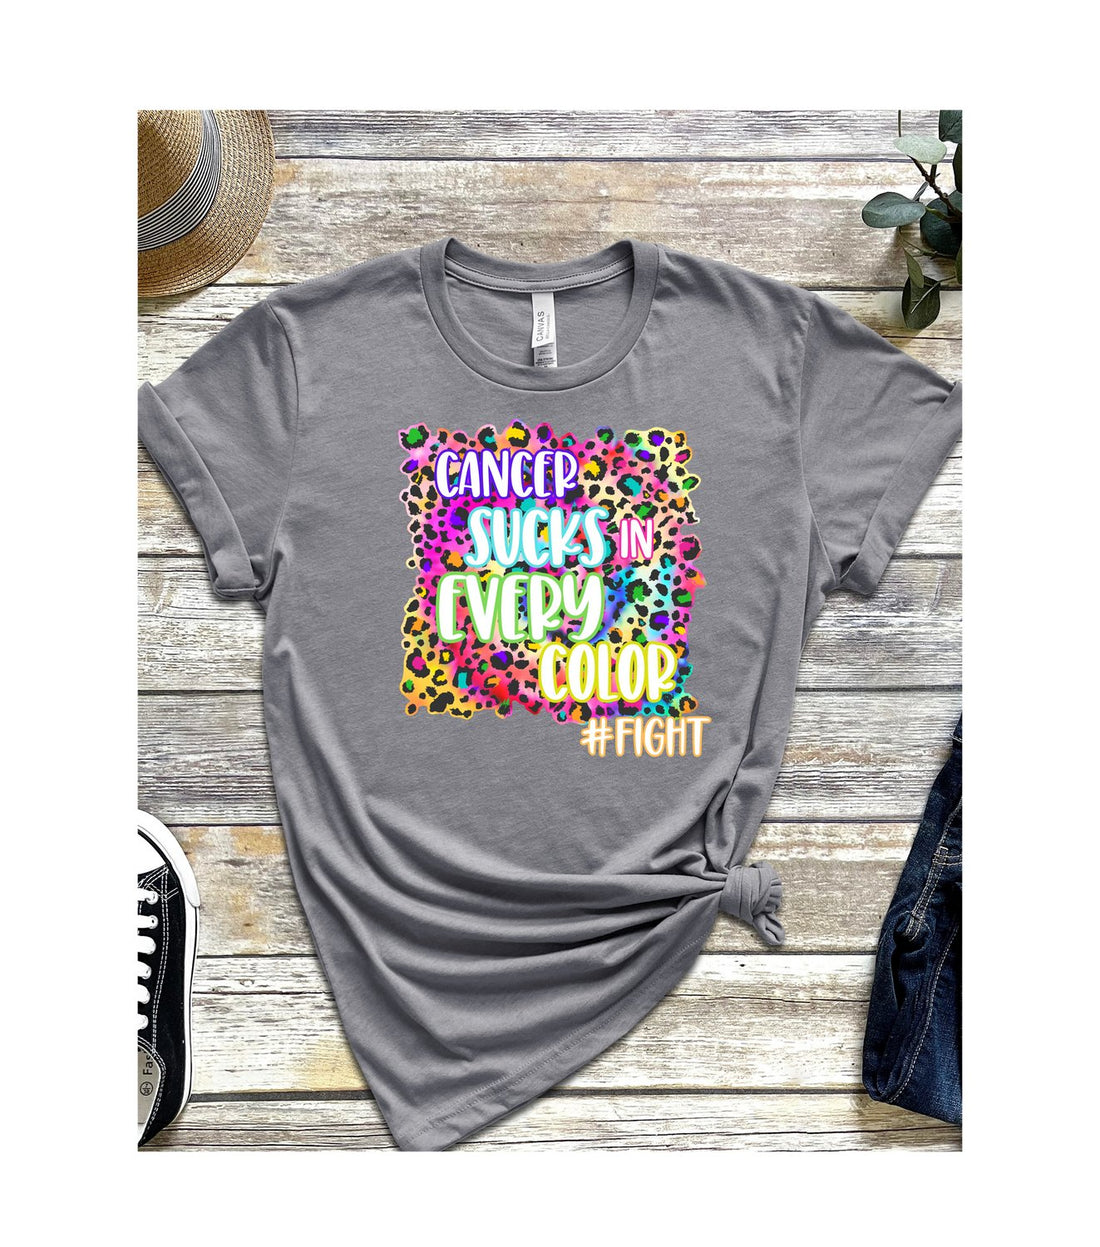 Cancer Sucks - T-Shirts - Positively Sassy - Cancer Sucks